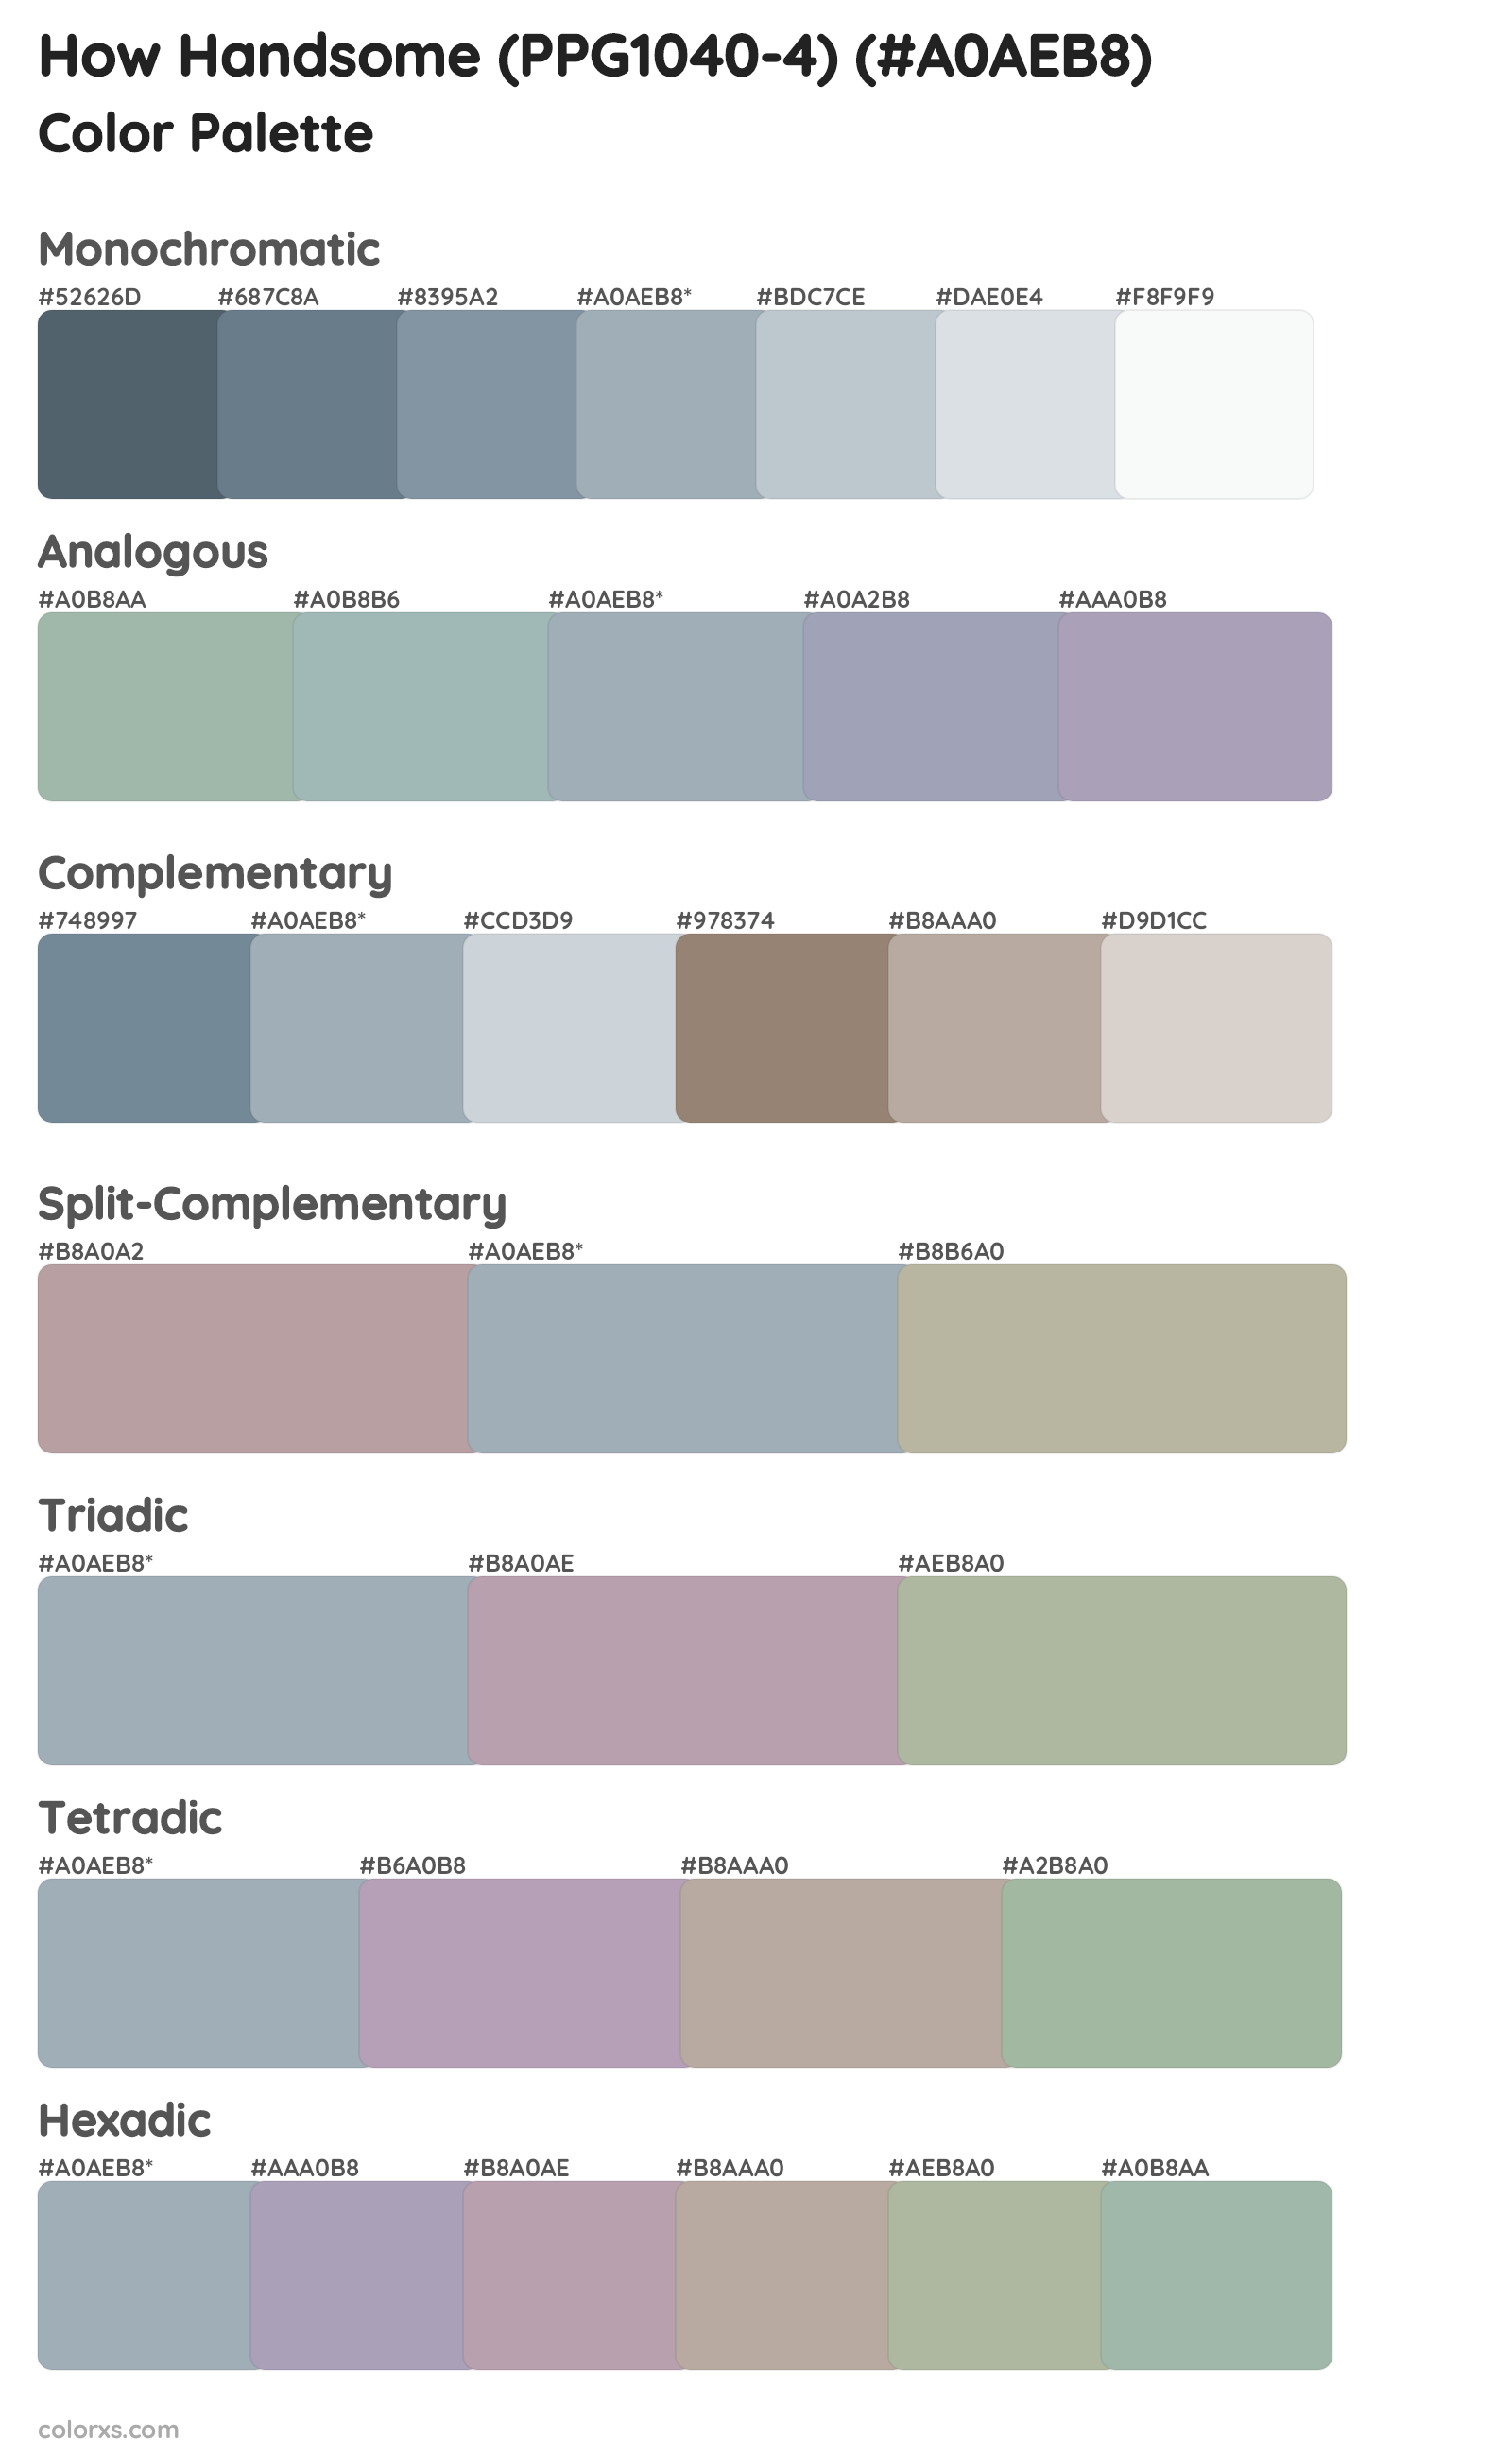 How Handsome (PPG1040-4) Color Scheme Palettes